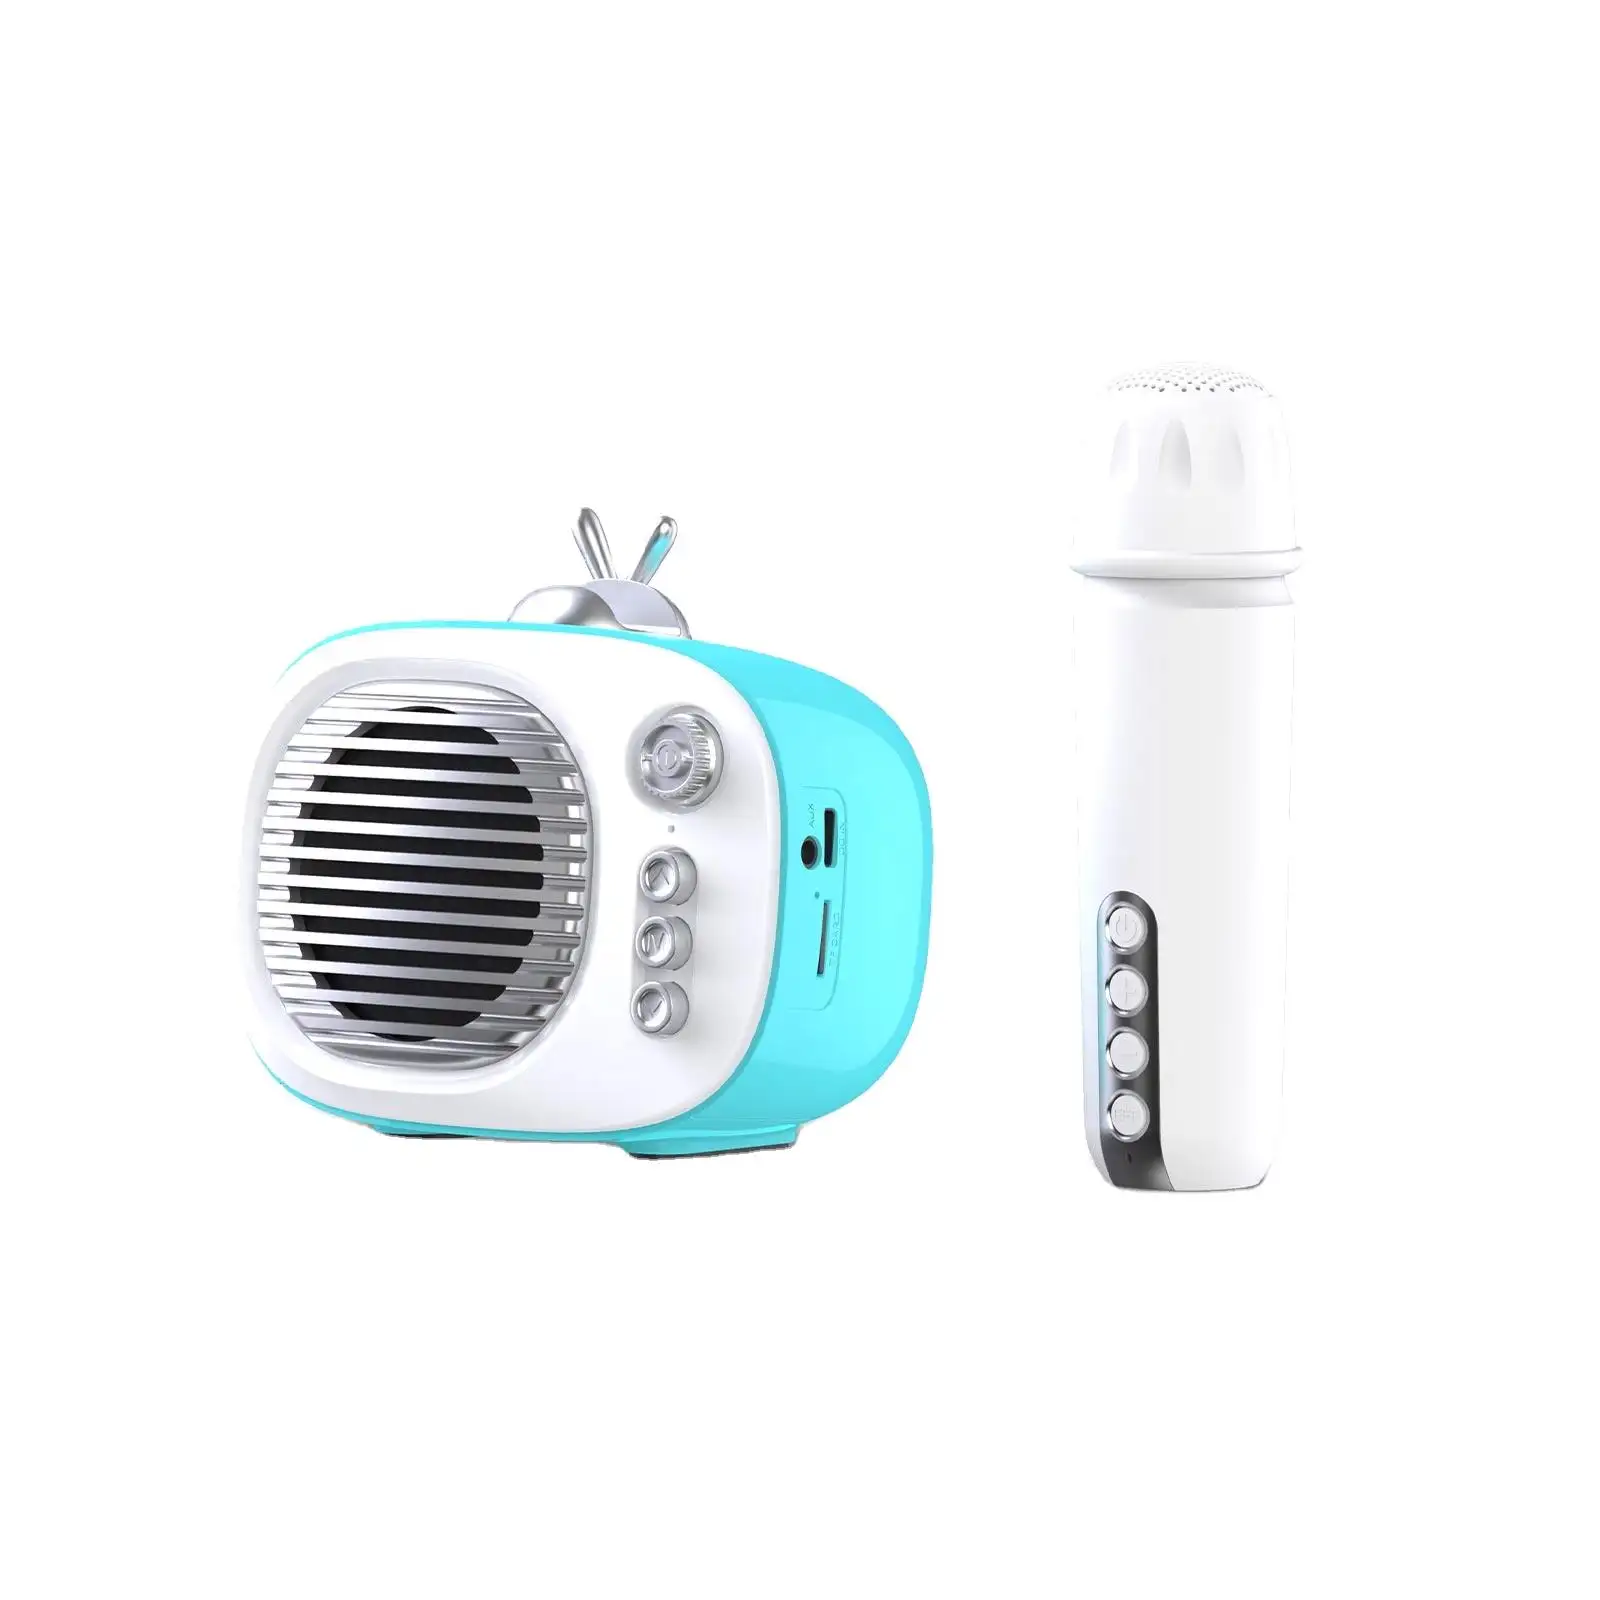 Mini e compacto, fácil de transportar estéreo que pode cantar karaoke 2,24 polegadas alto-falante 360 som surround